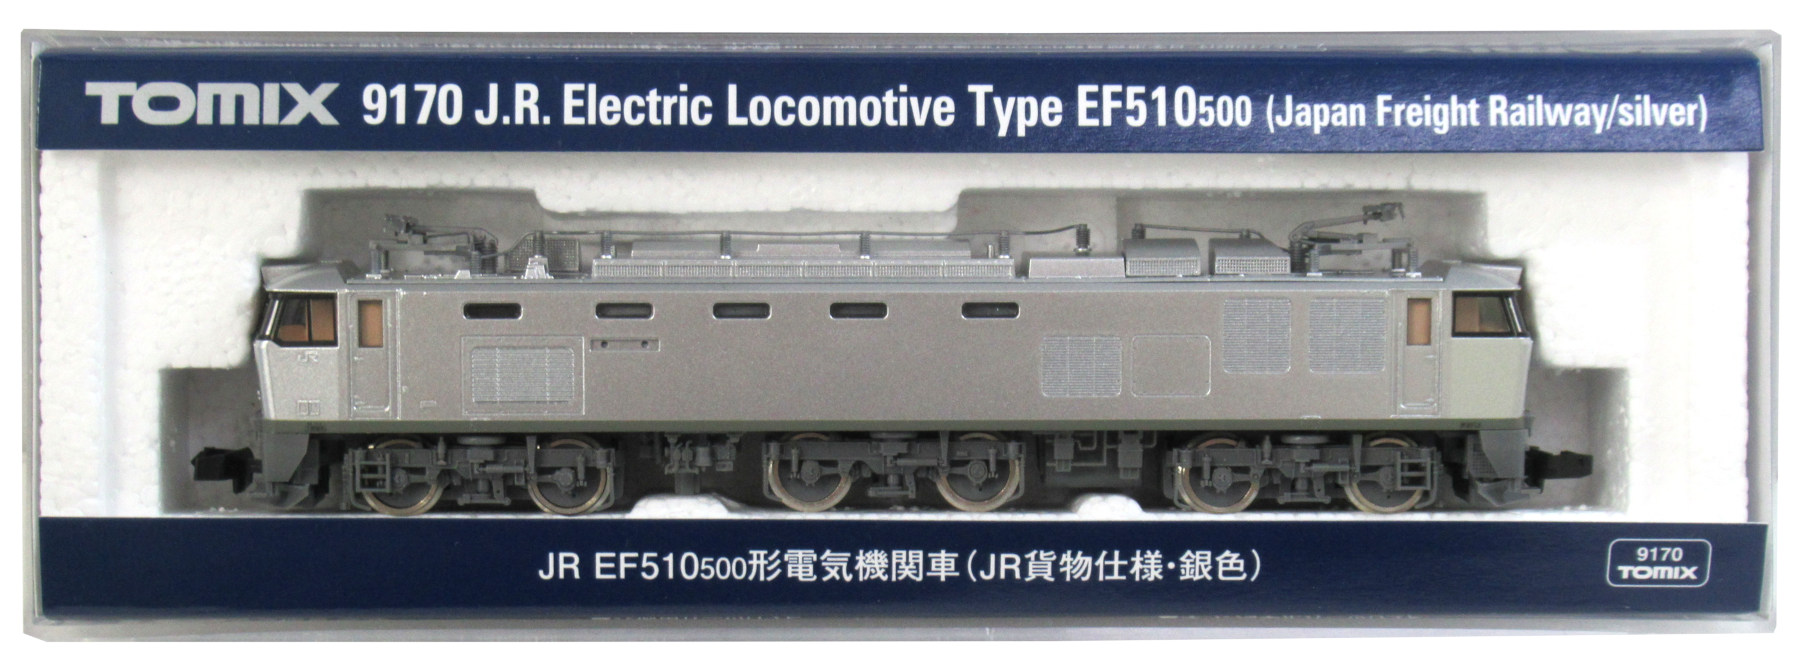 9170 JR EF510-500 JR貨物仕様・銀